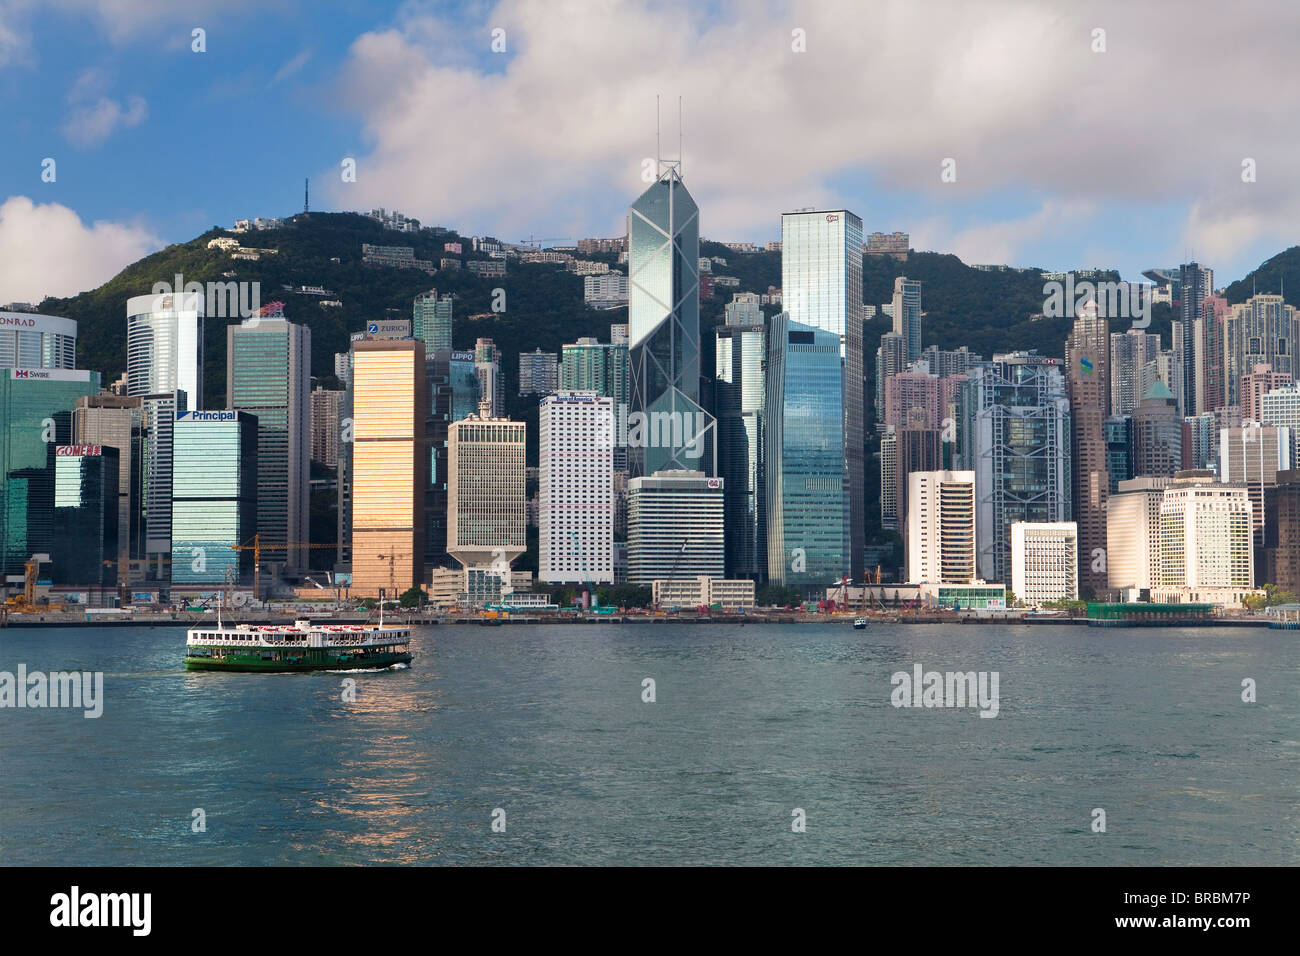 Toits de Central, l'île de Hong Kong, le port de Victoria, Hong Kong, Chine Banque D'Images